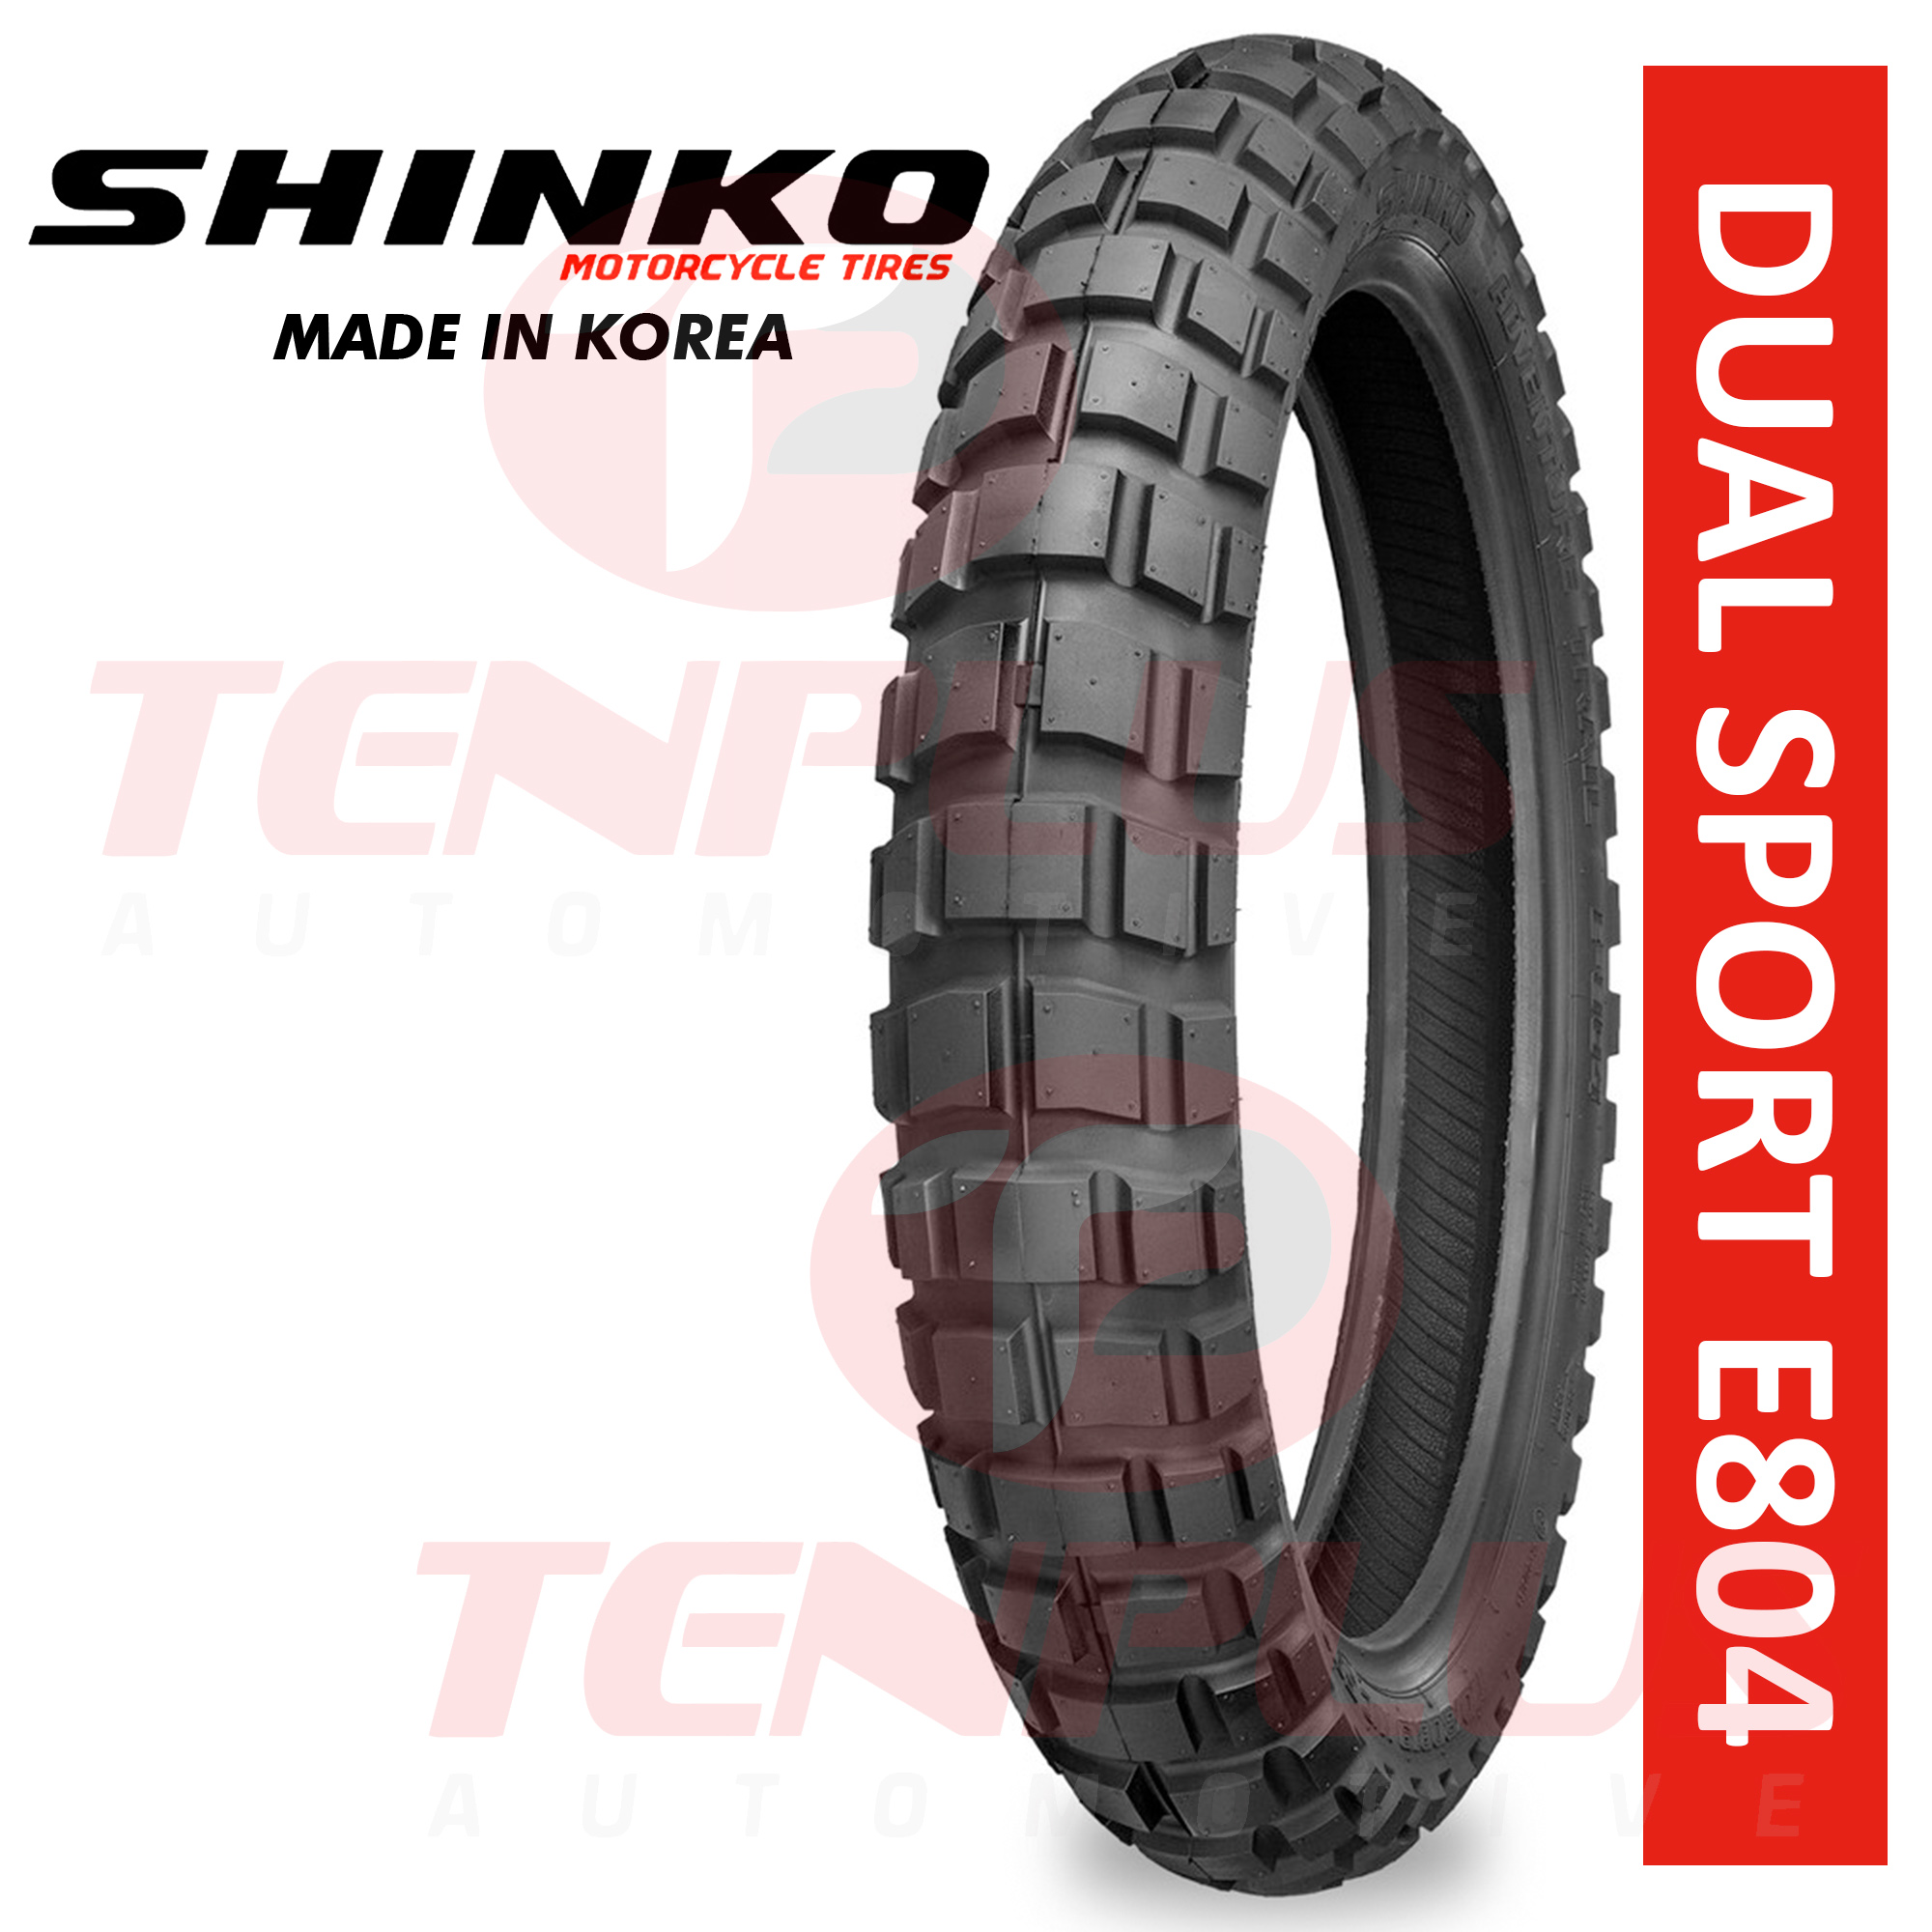 Shinko E-804 and E-805 Adventure Tires Review [Project Yamaha